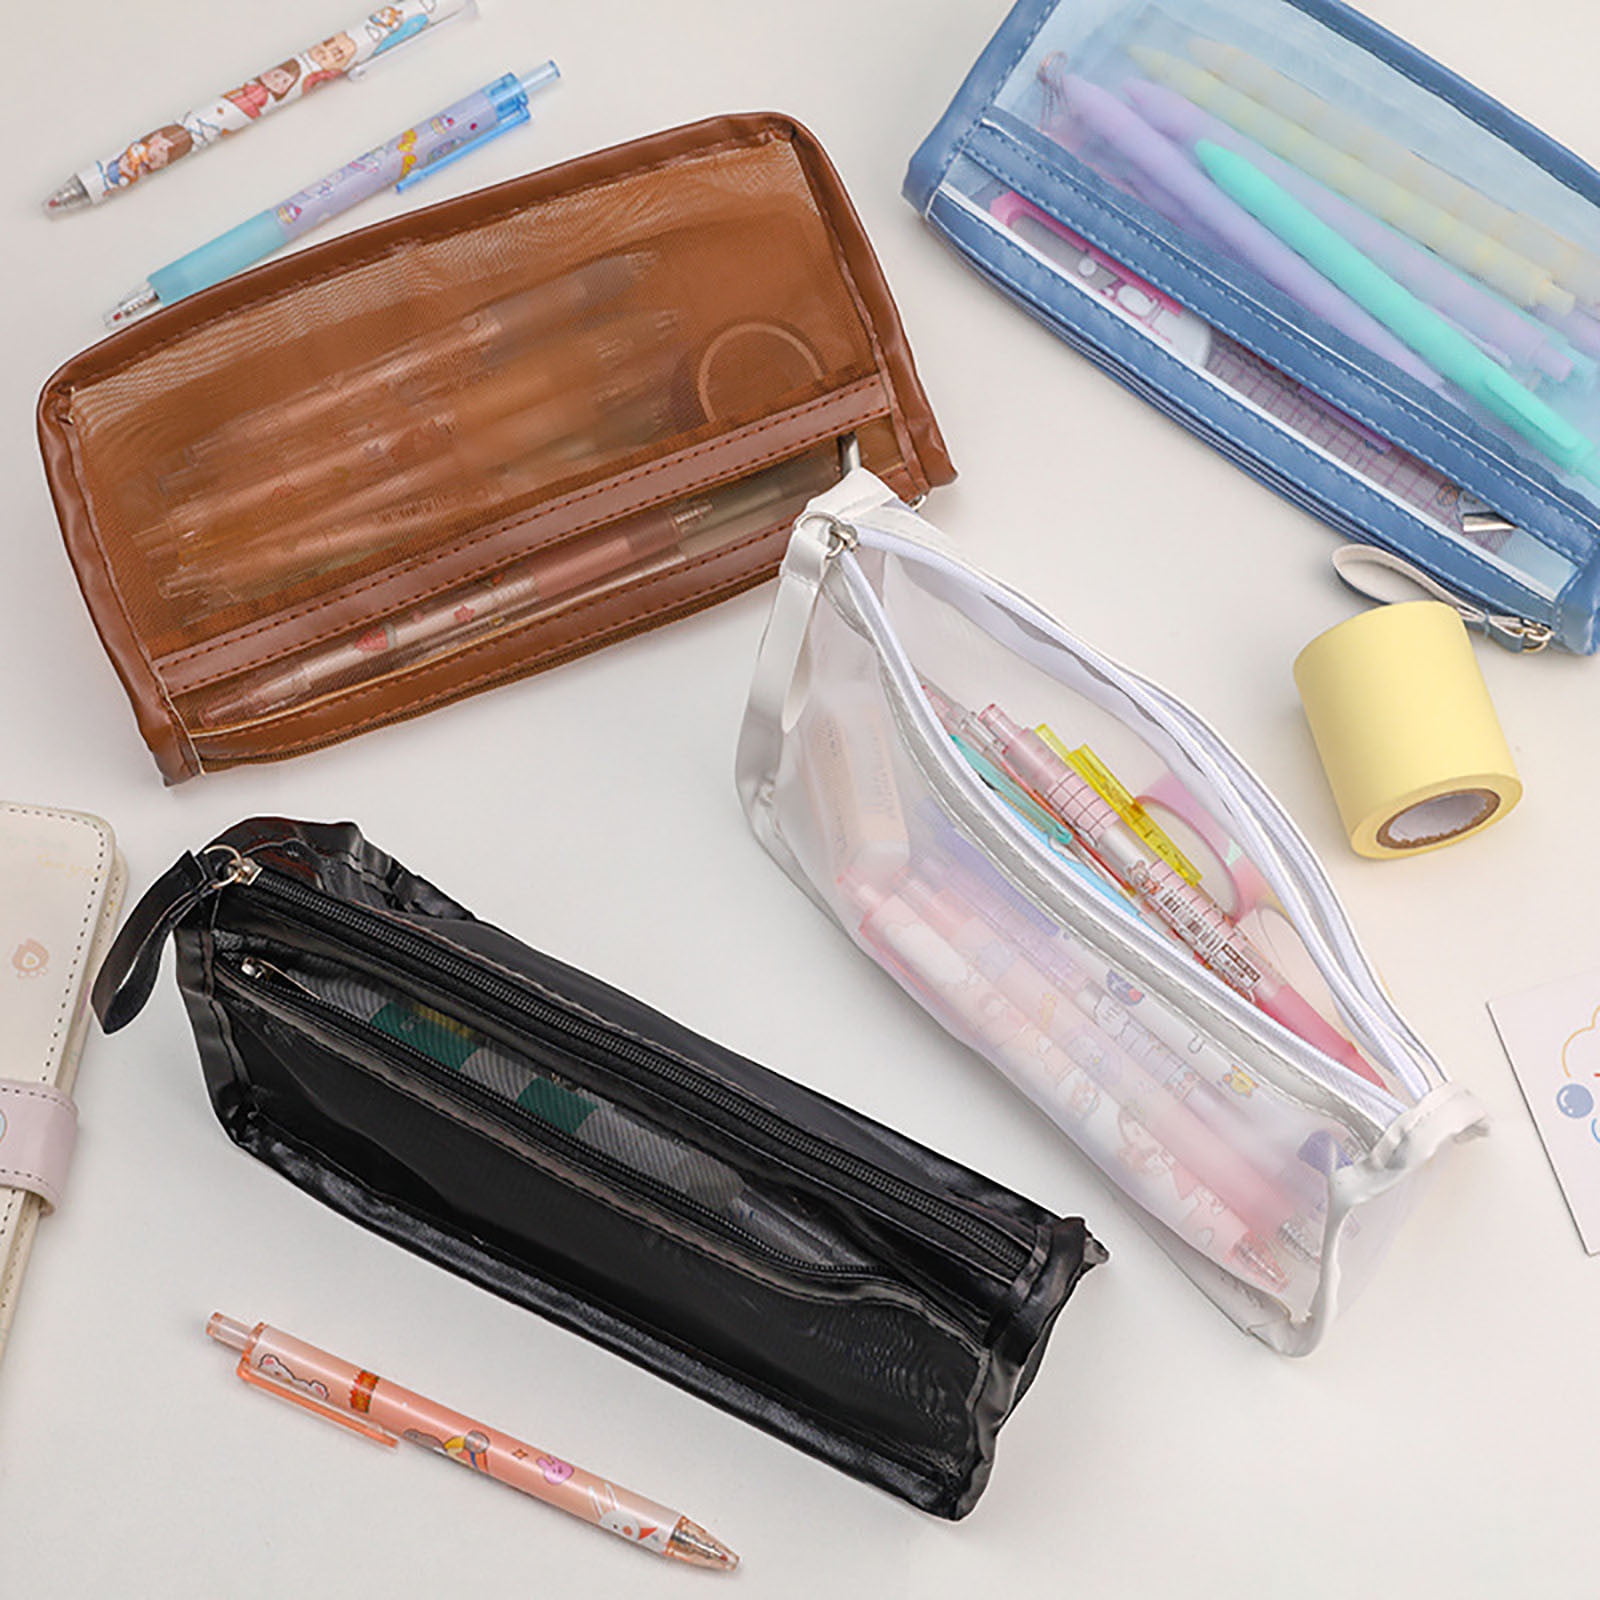 Wekity Pencil Case Set, Clear Exam Pencil Pouch, Mesh Zipper Pen